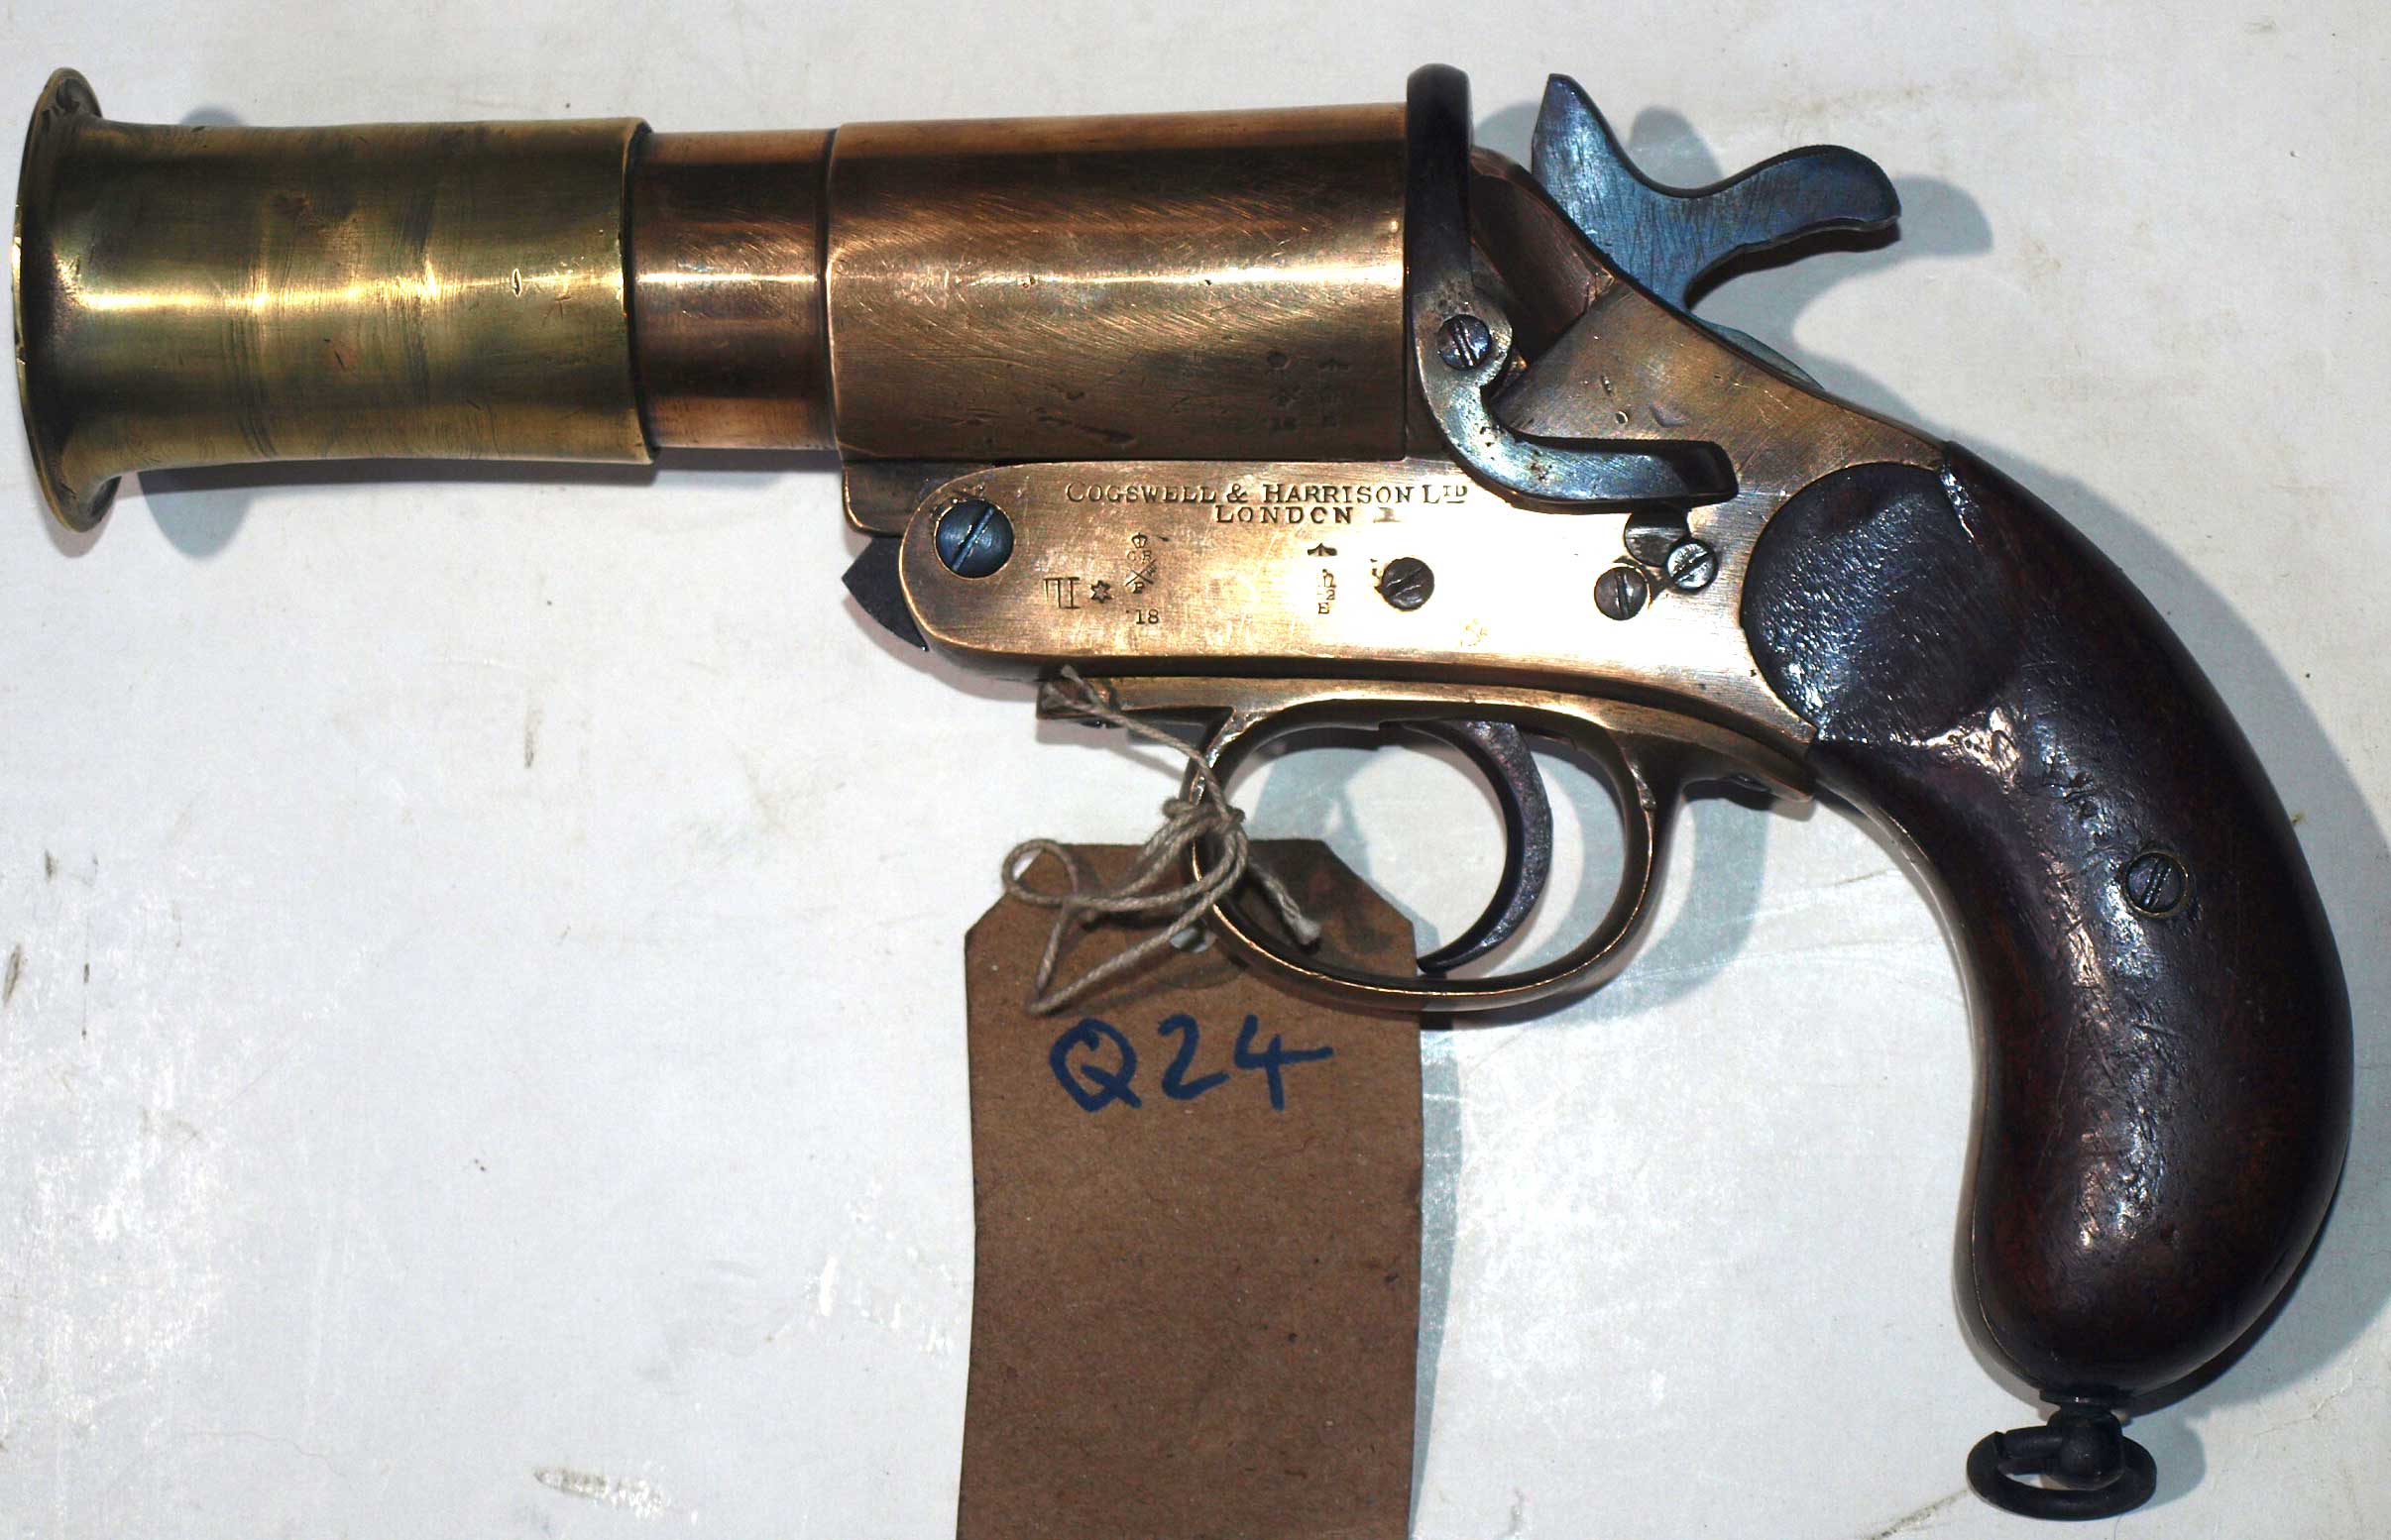 Cogswell & Harrison MK111 (modified) Signal Pistol (Q24 